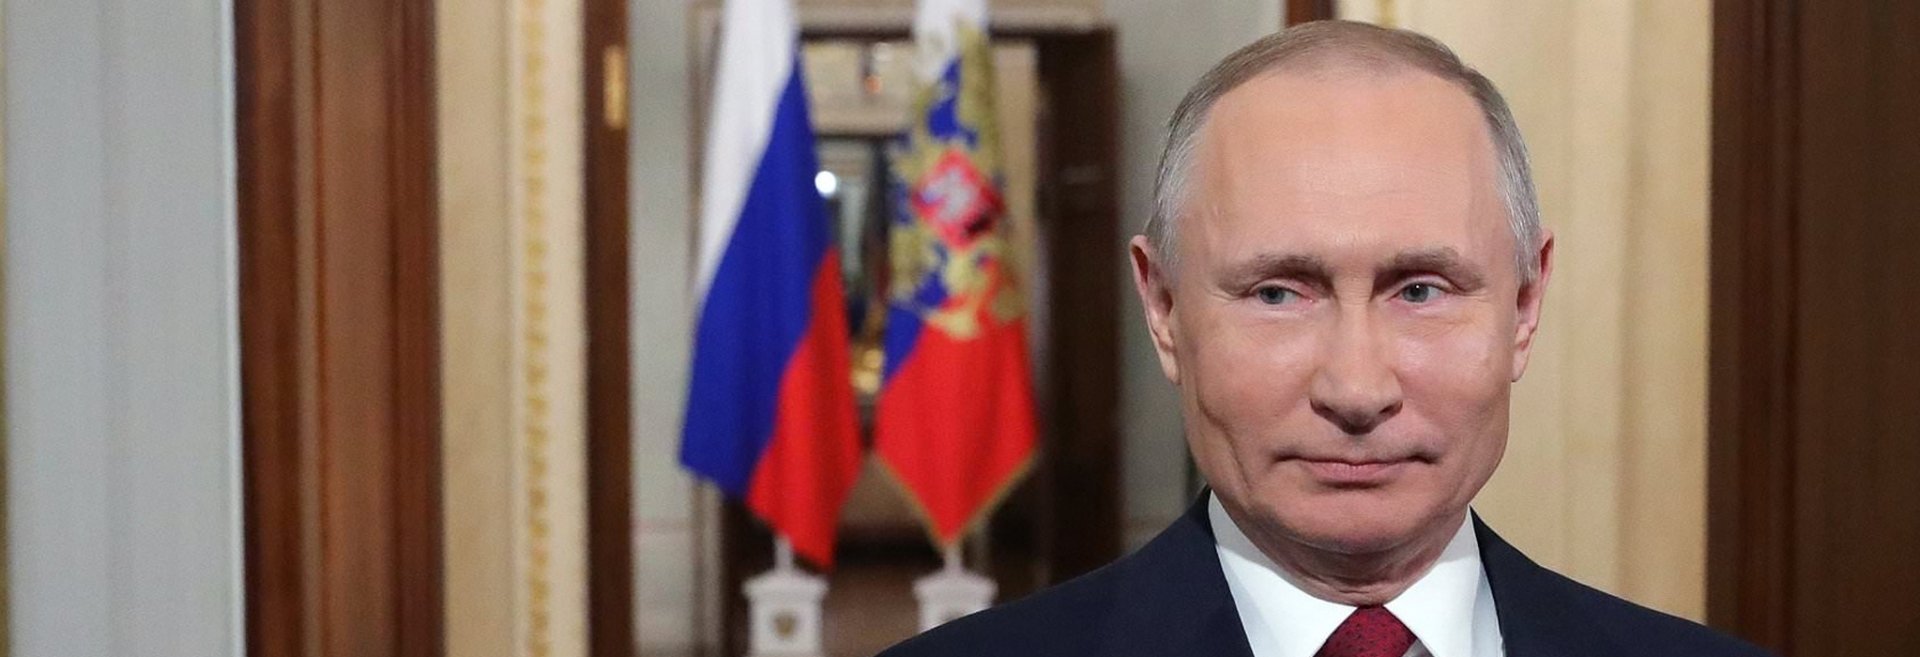 Oil price war complicates Putin’s political plans